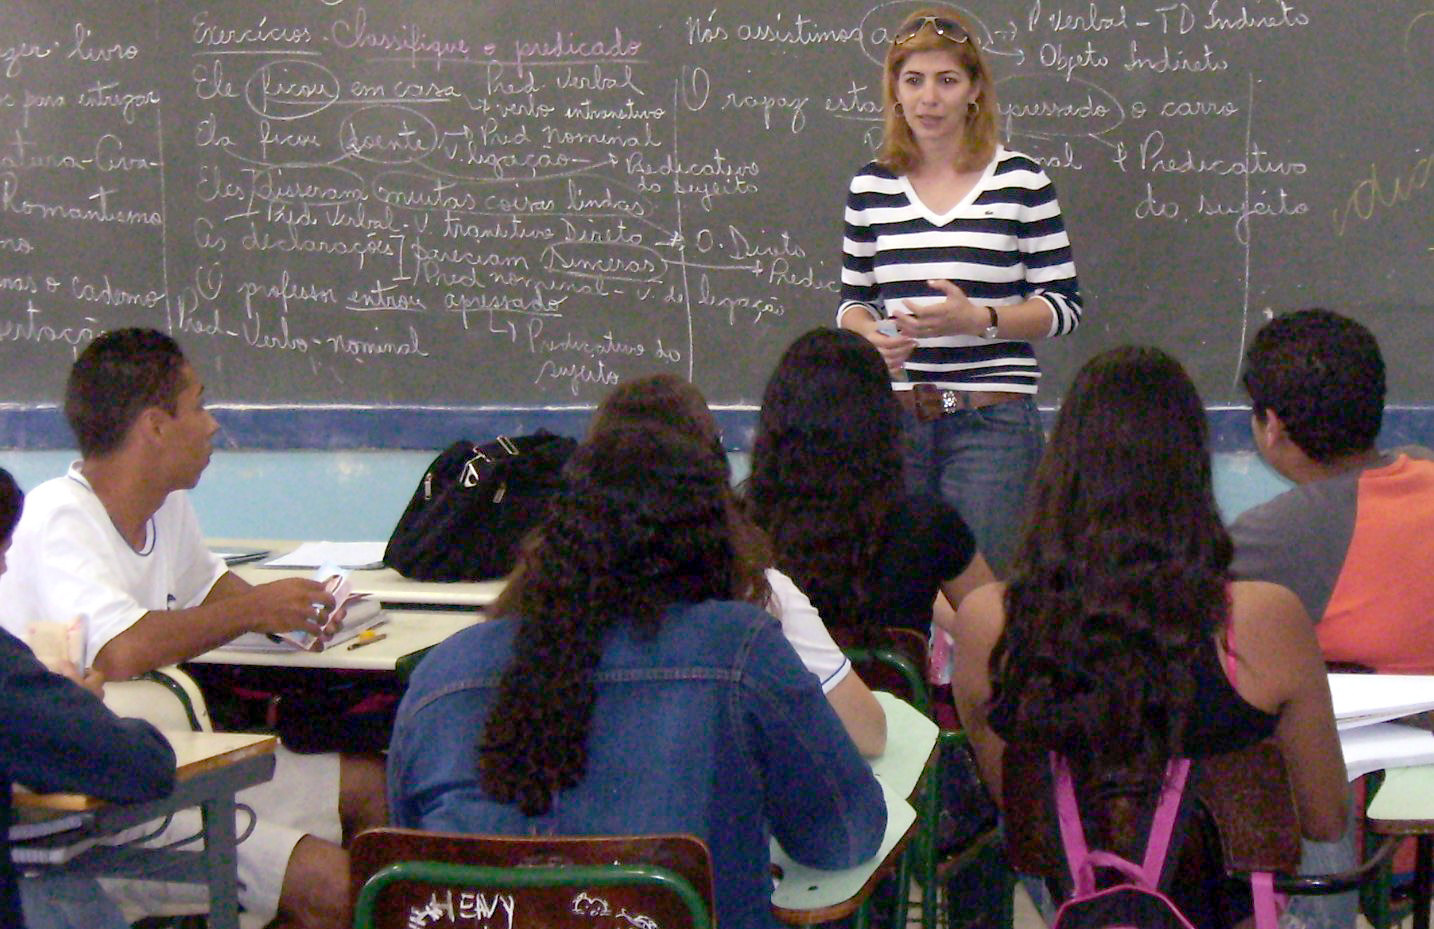 Haifa Madi conversa com alunos da Escola Estadual Raquel de Castro<a style='float:right;color:#ccc' href='https://www3.al.sp.gov.br/repositorio/noticia/03-2008/HAIFA CAMPANHA GRAVIDEZ.jpg' target=_blank><i class='bi bi-zoom-in'></i> Clique para ver a imagem </a>